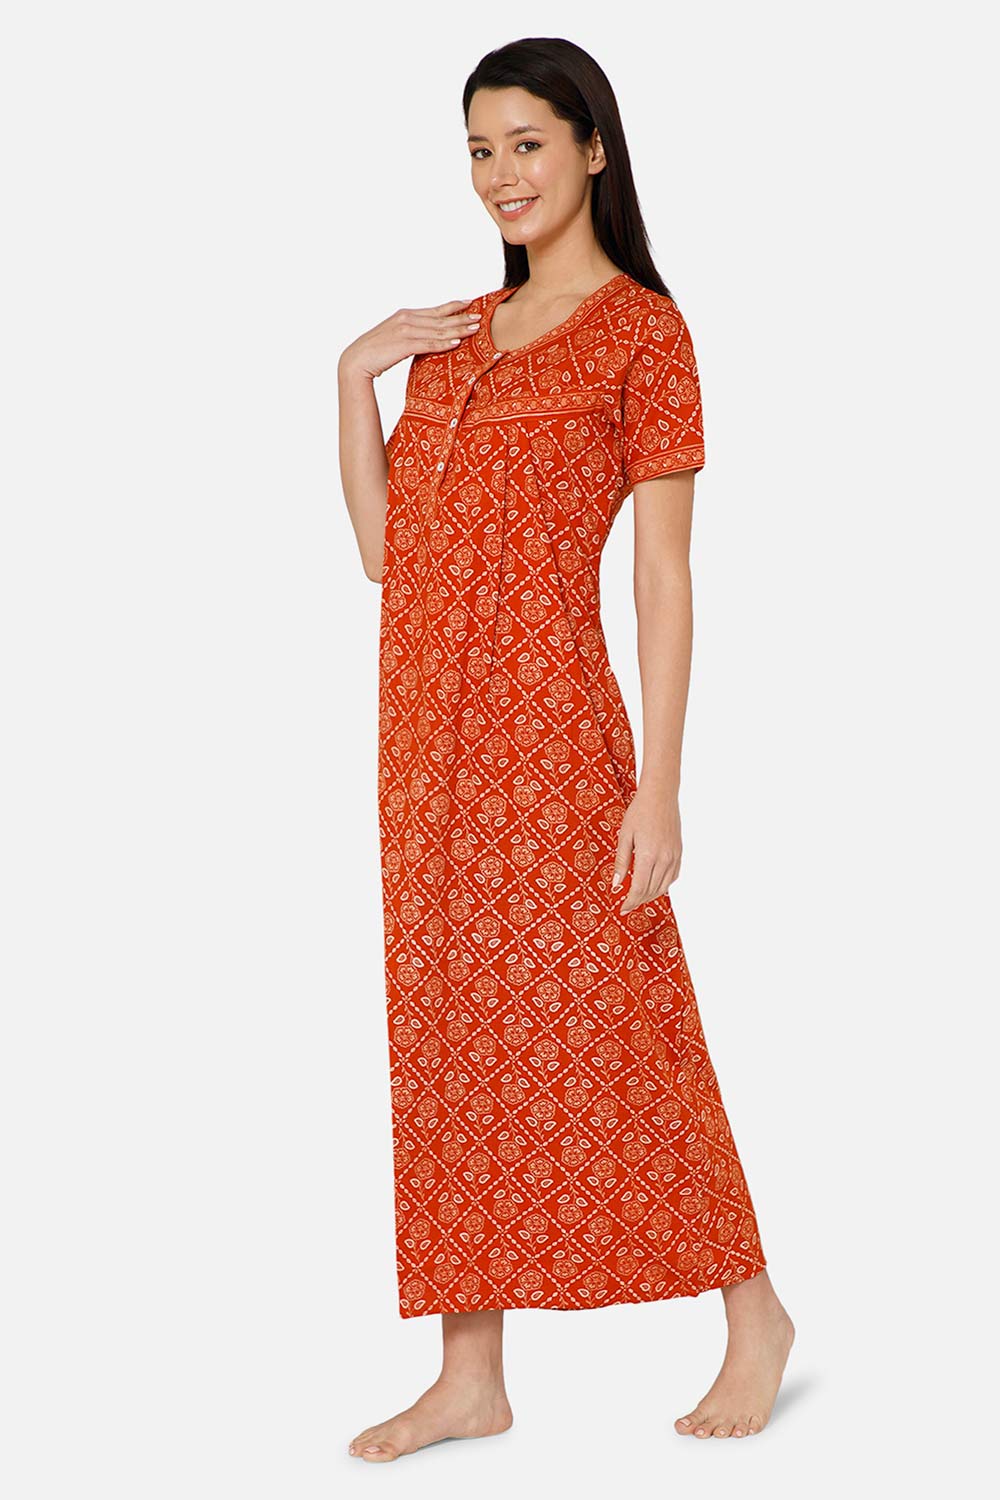 Naidu Hall A-line Front Open Women's Nighty Full Length Half Sleeve  - Orange - R133